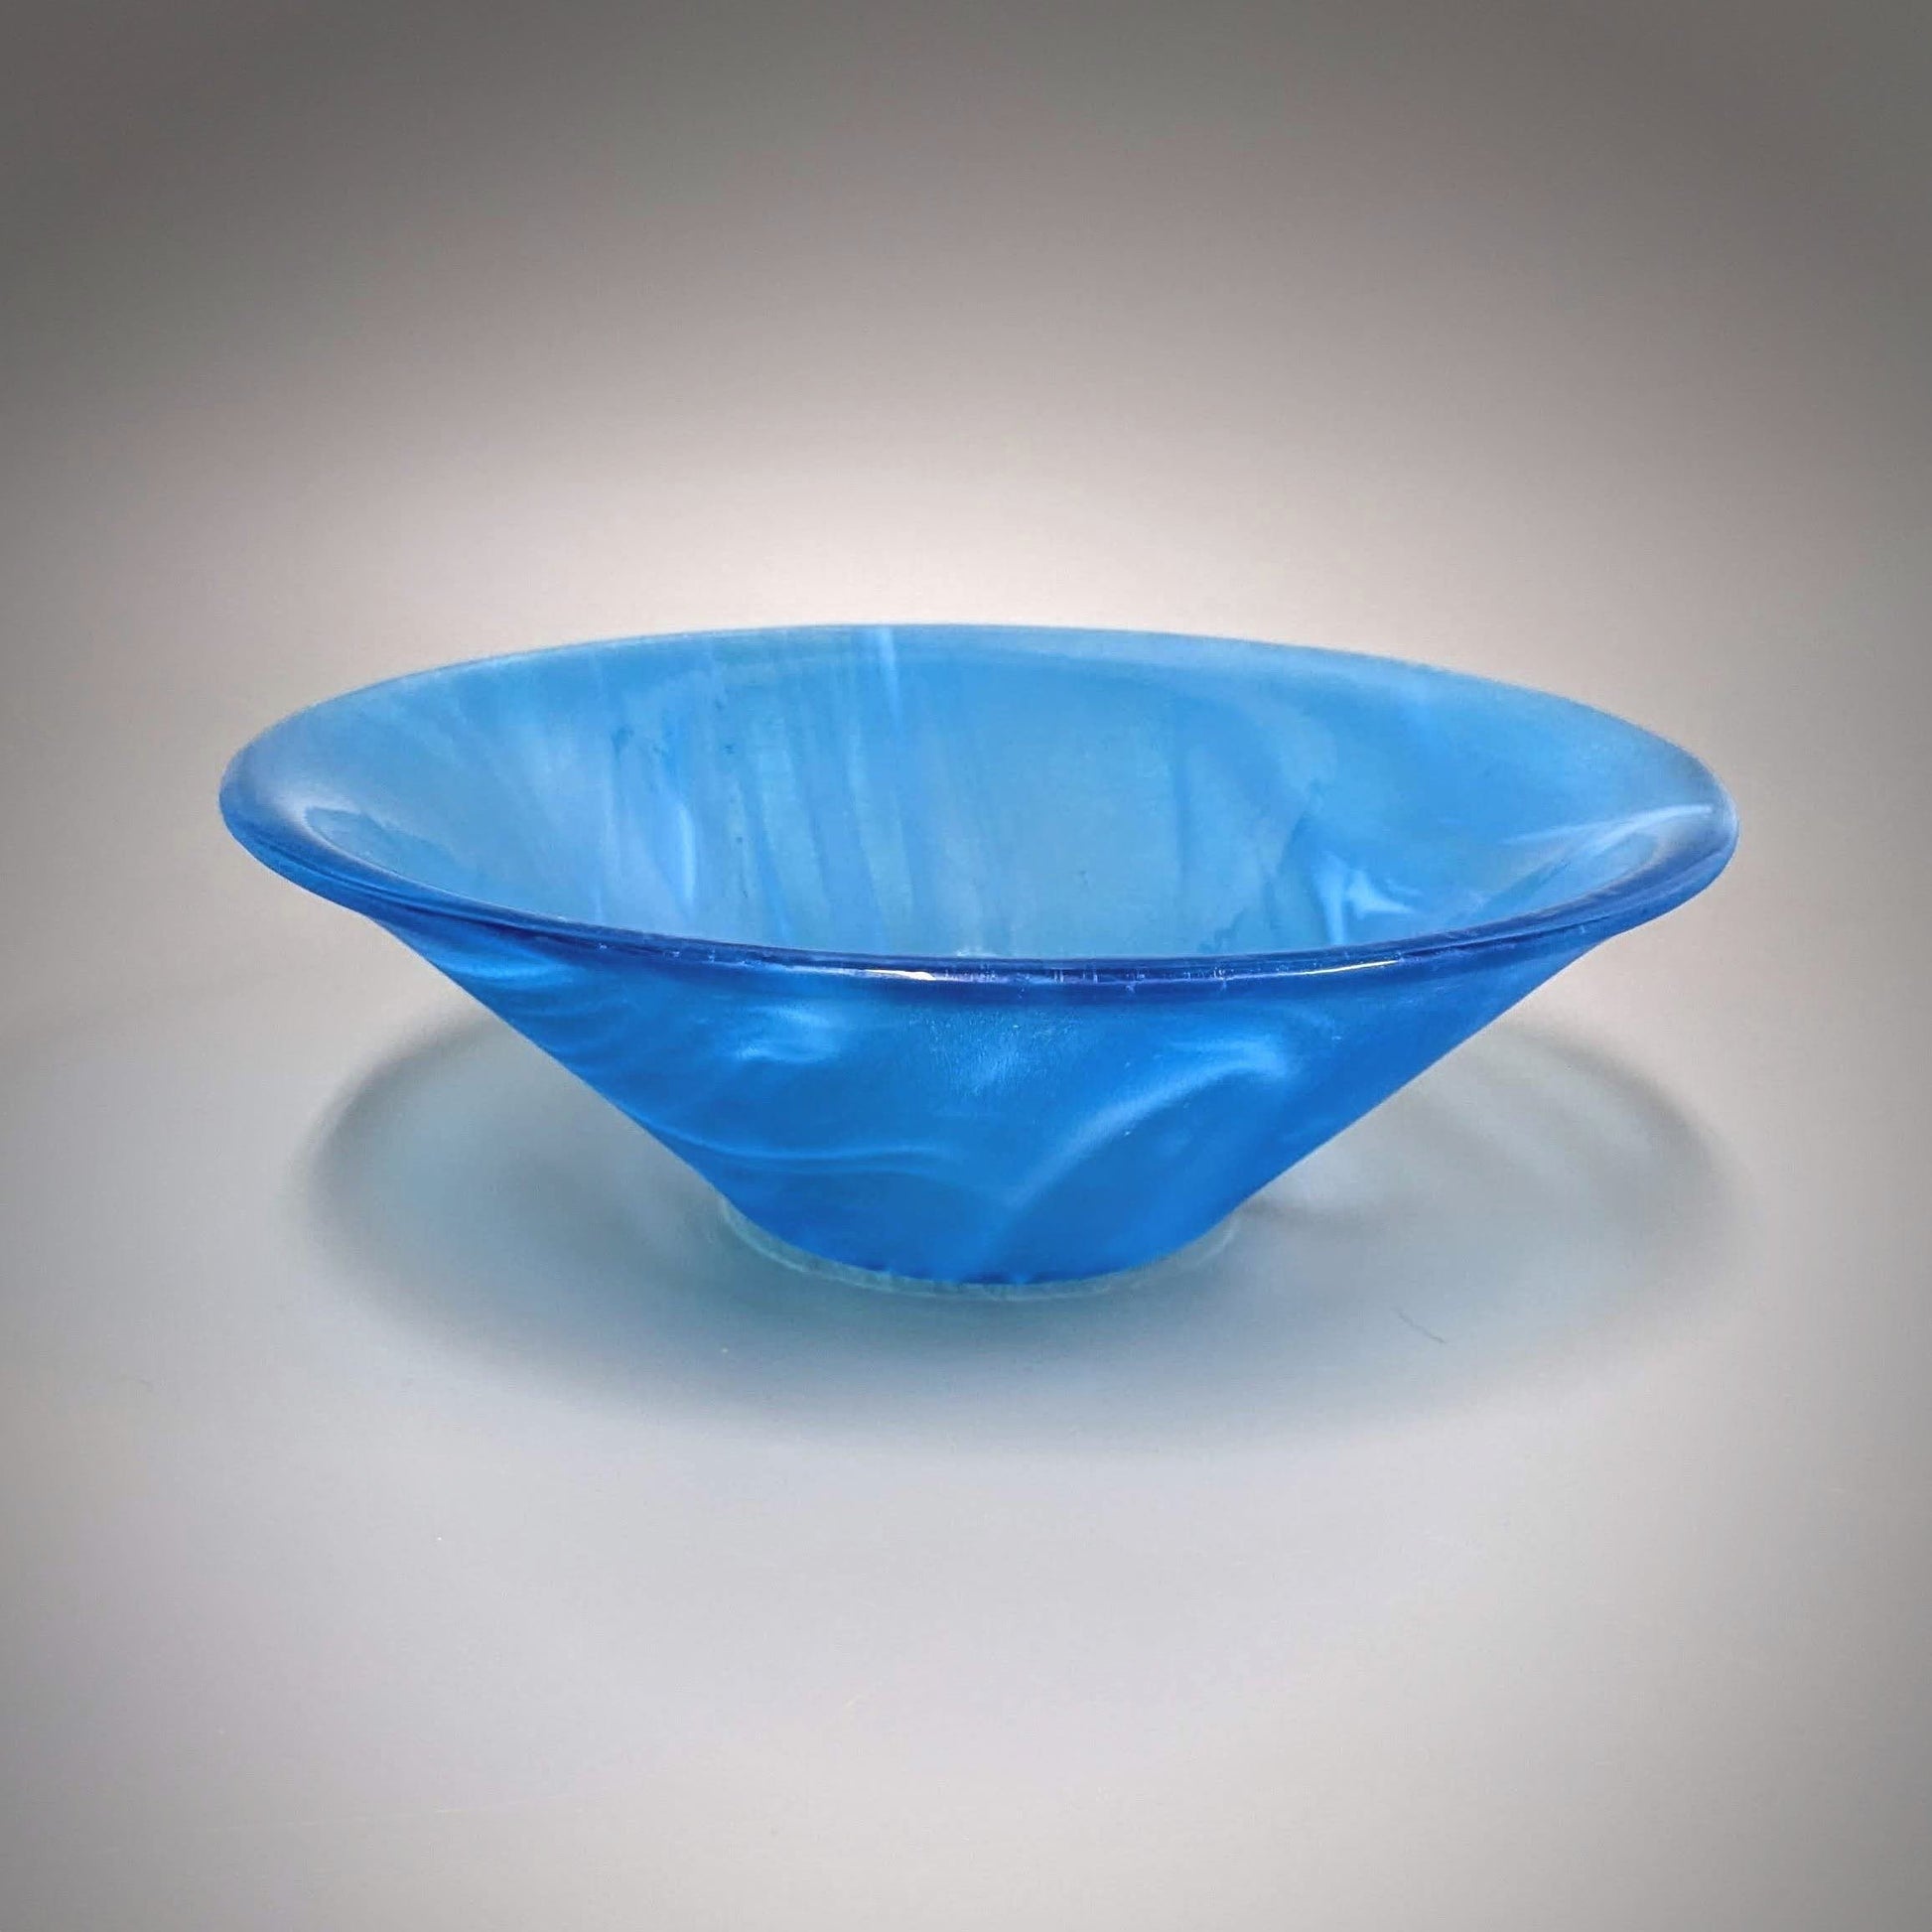 Glass Art Fruit Bowl in Medium Sky Blue | Handcrafted Décor Gift Ideas